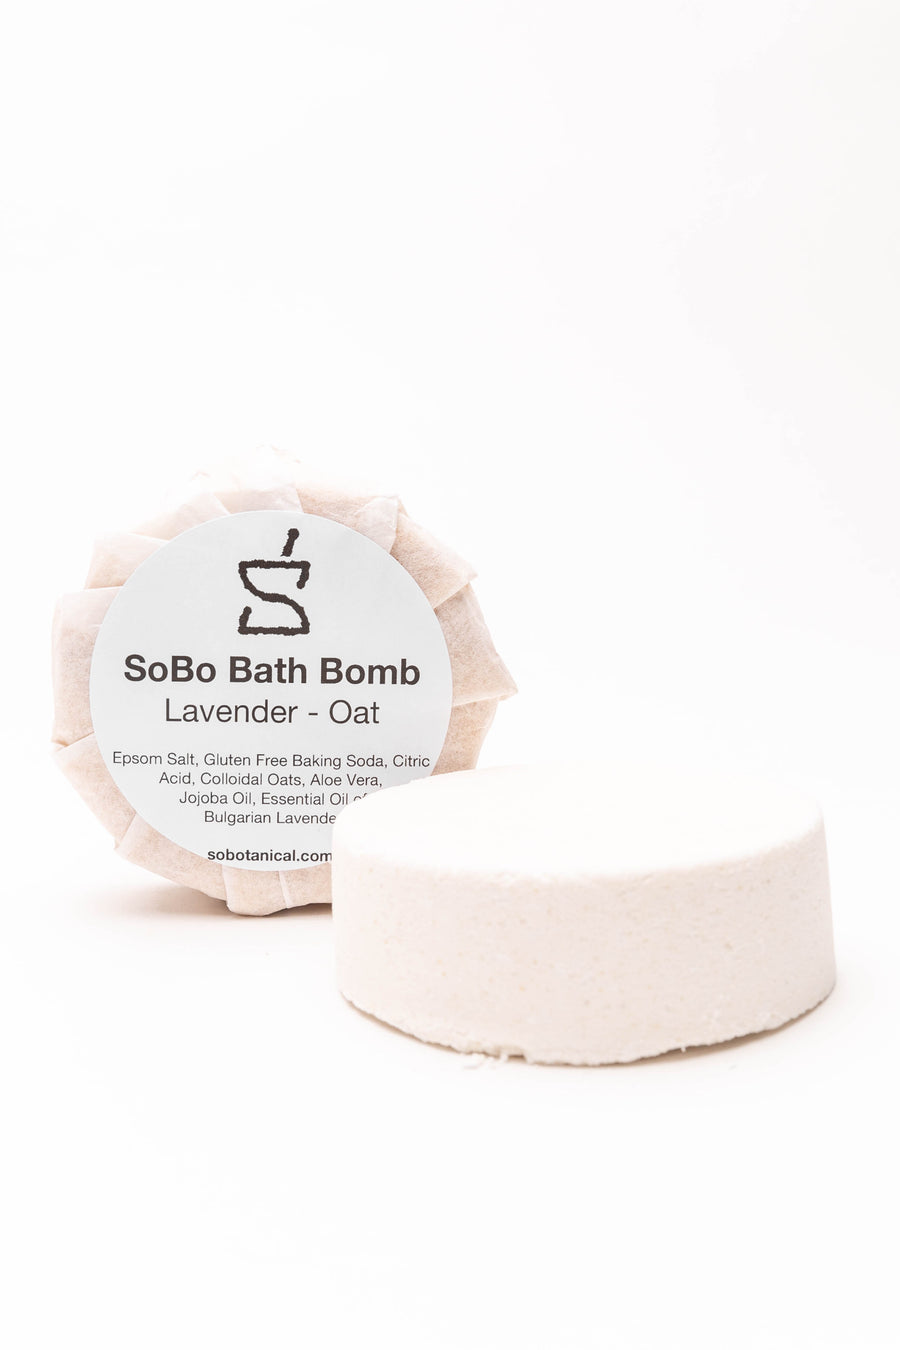 SoBo Bath Bomb - Lavender Oat